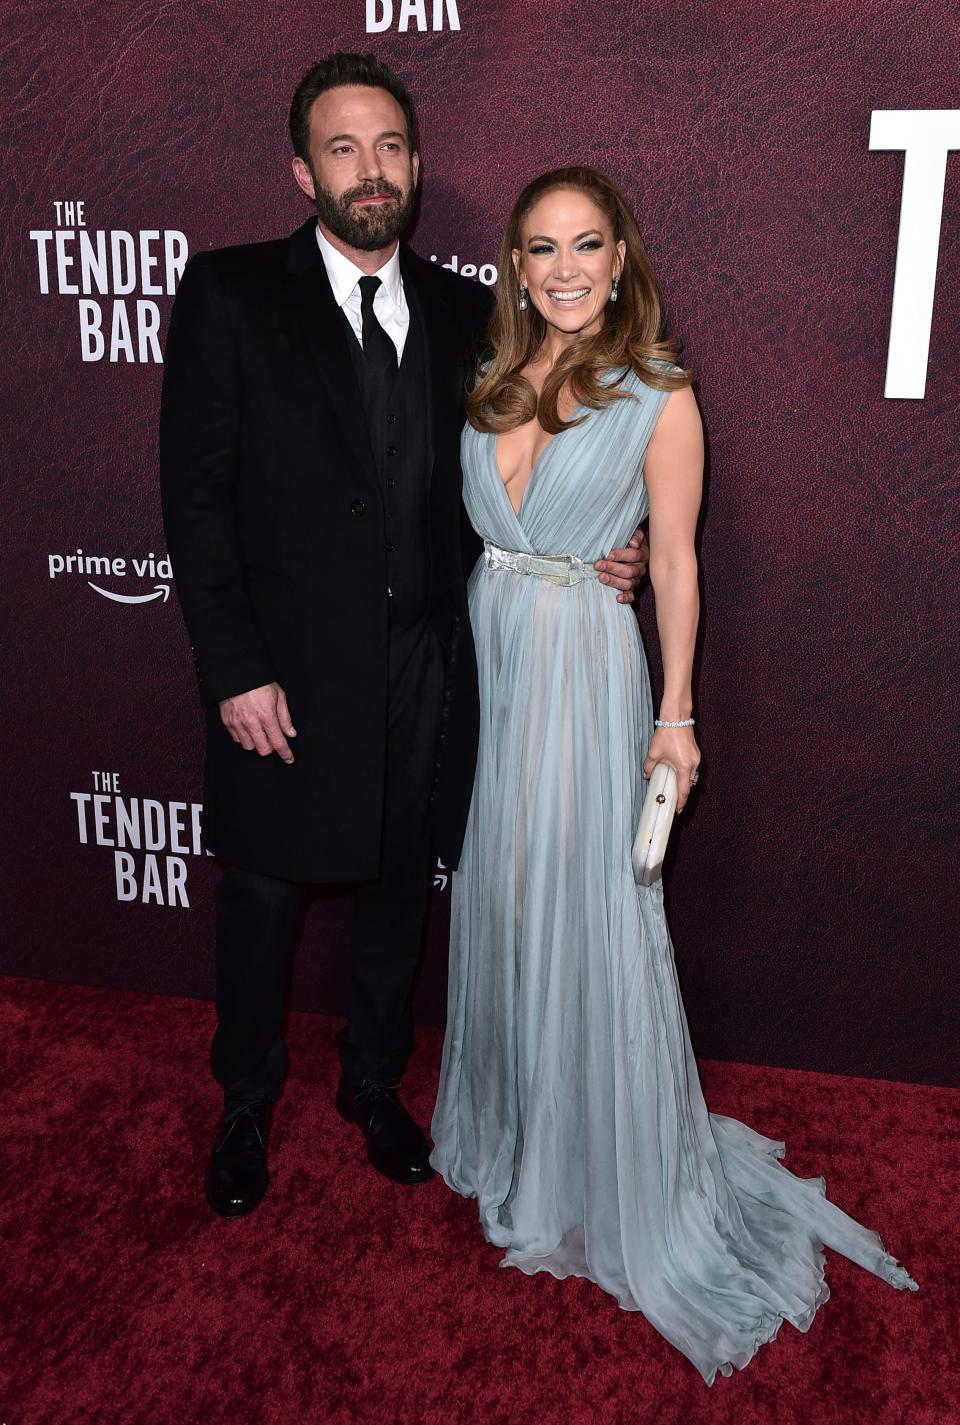 Ben Affleck and Jennifer Lopez arrive at the premiere of "The Tender Bar" on Sunday, Dec. 12, 2021.